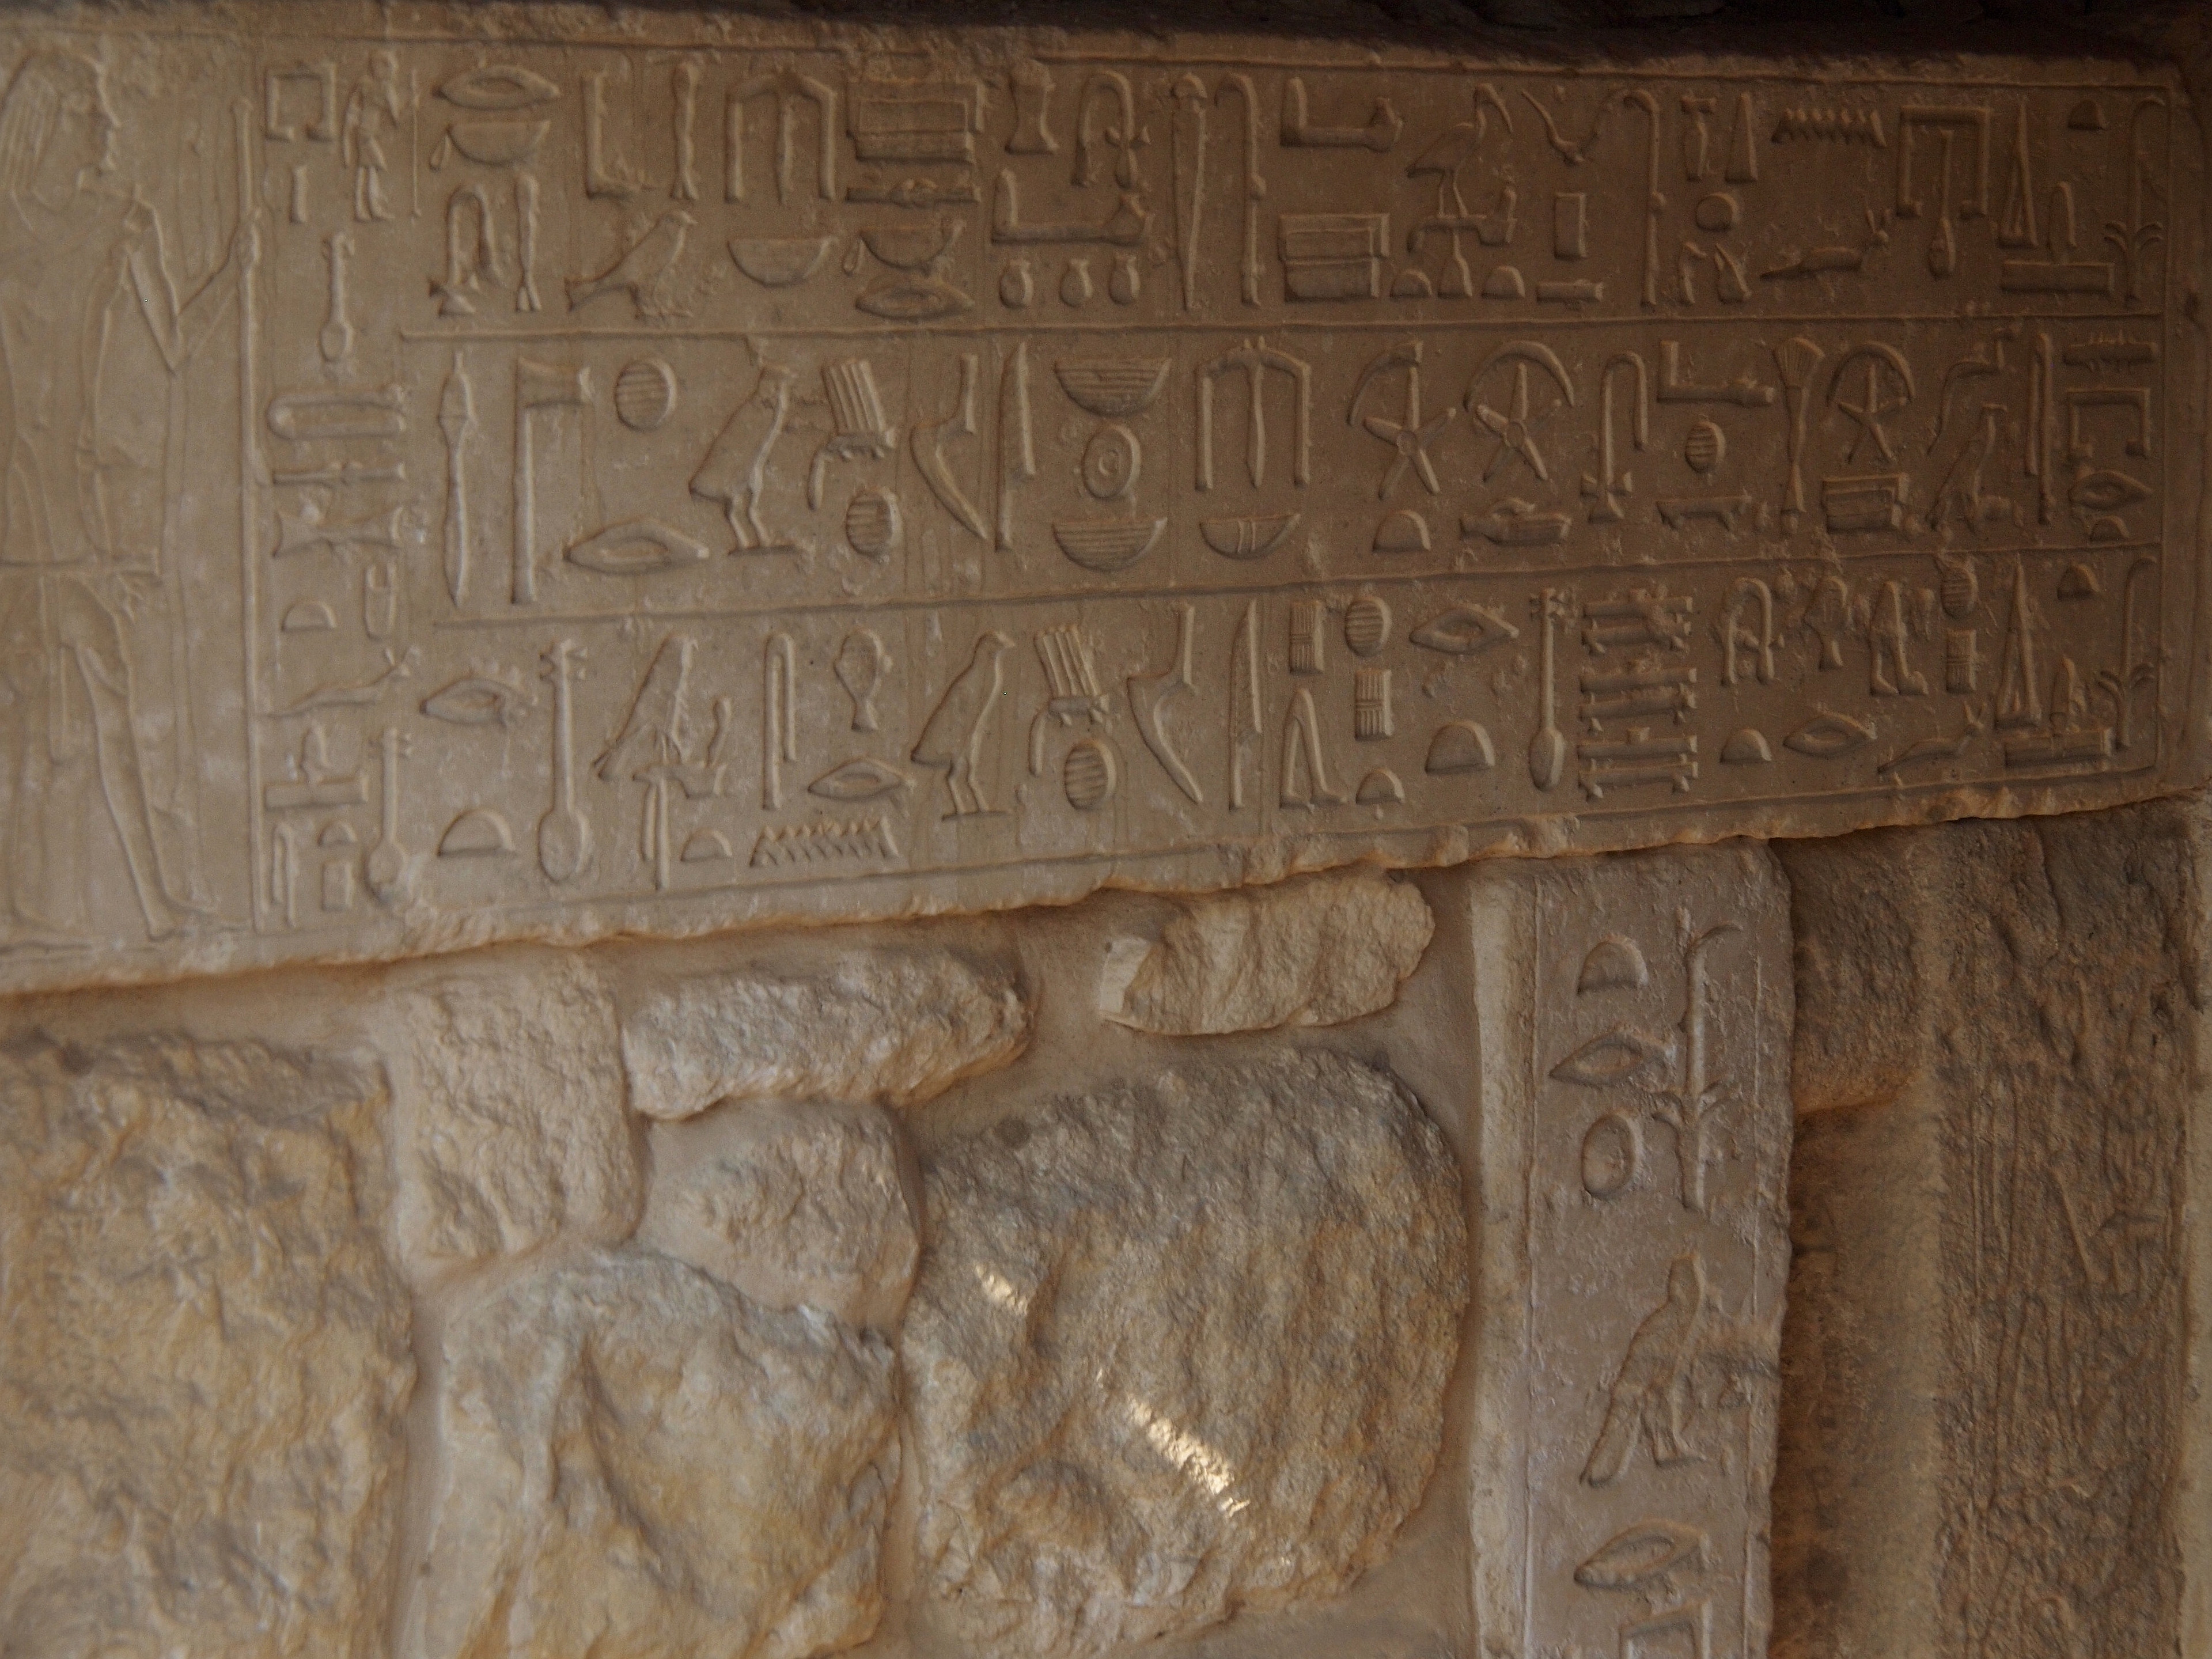 Man Made Hieroglyphics 3840x2880